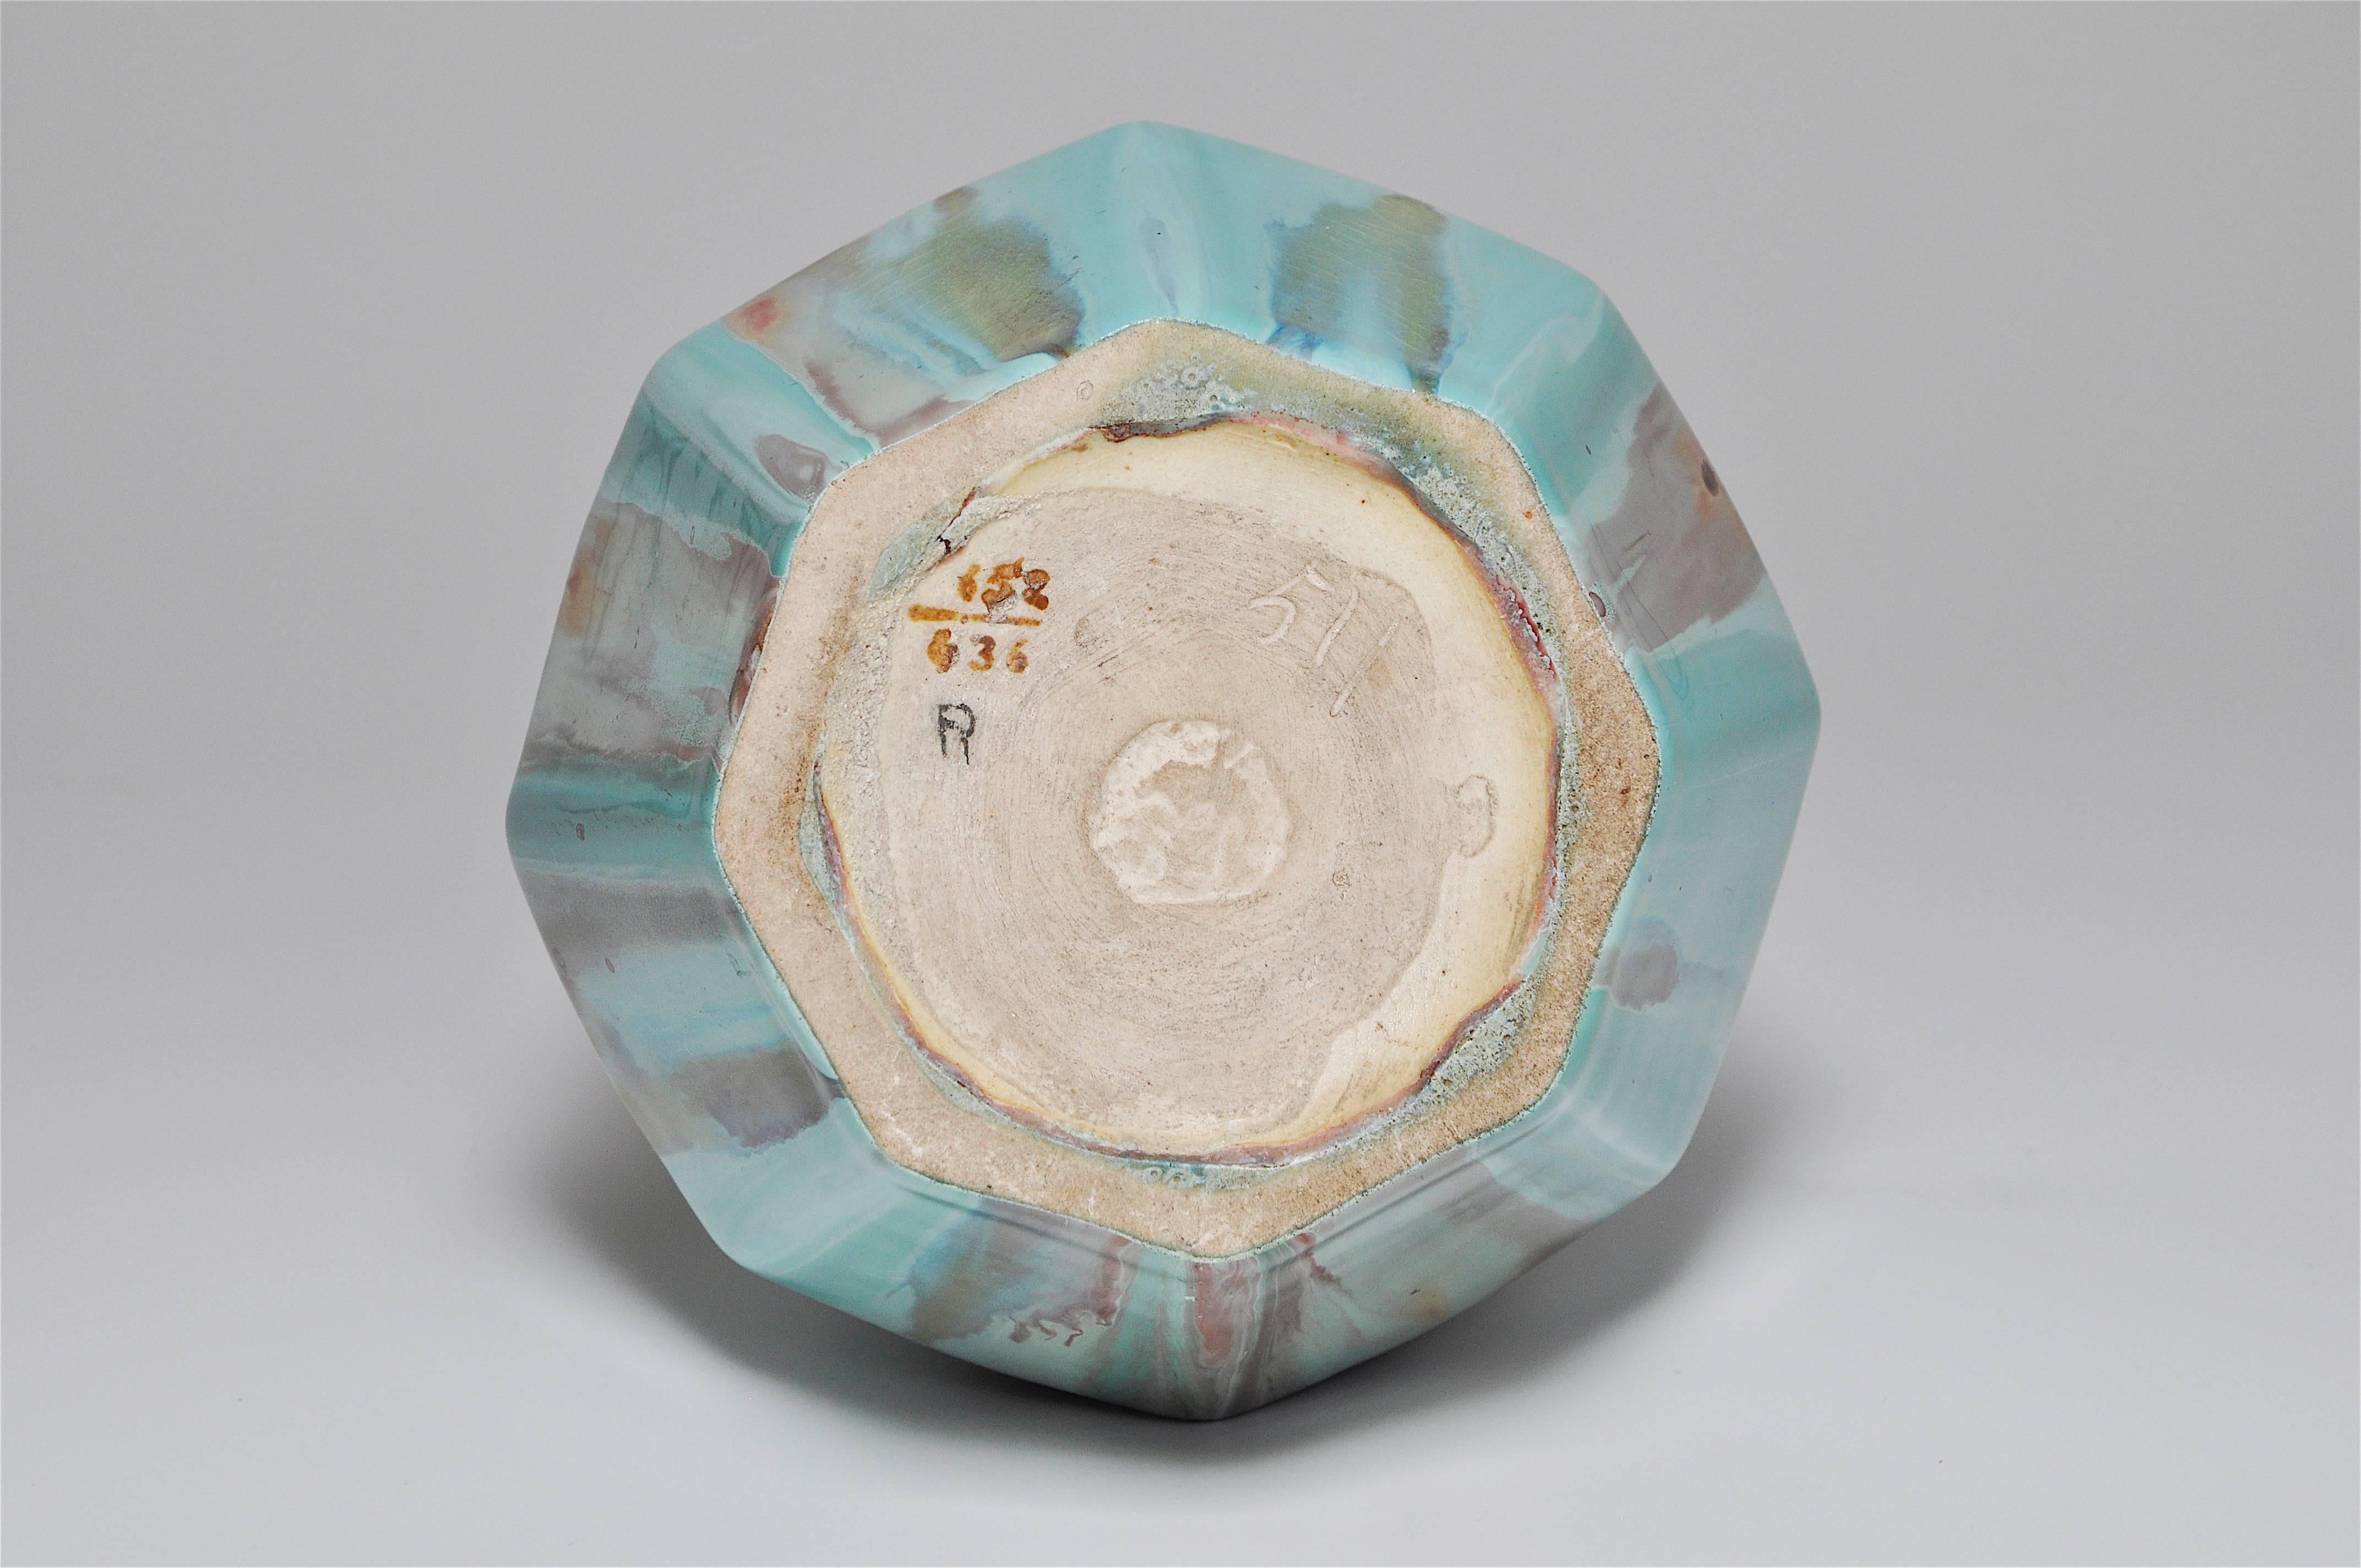 Rare French Art Deco Gabriel Fourmaintraux Desvres Pot Turquoise Ceramic Vase For Sale 3